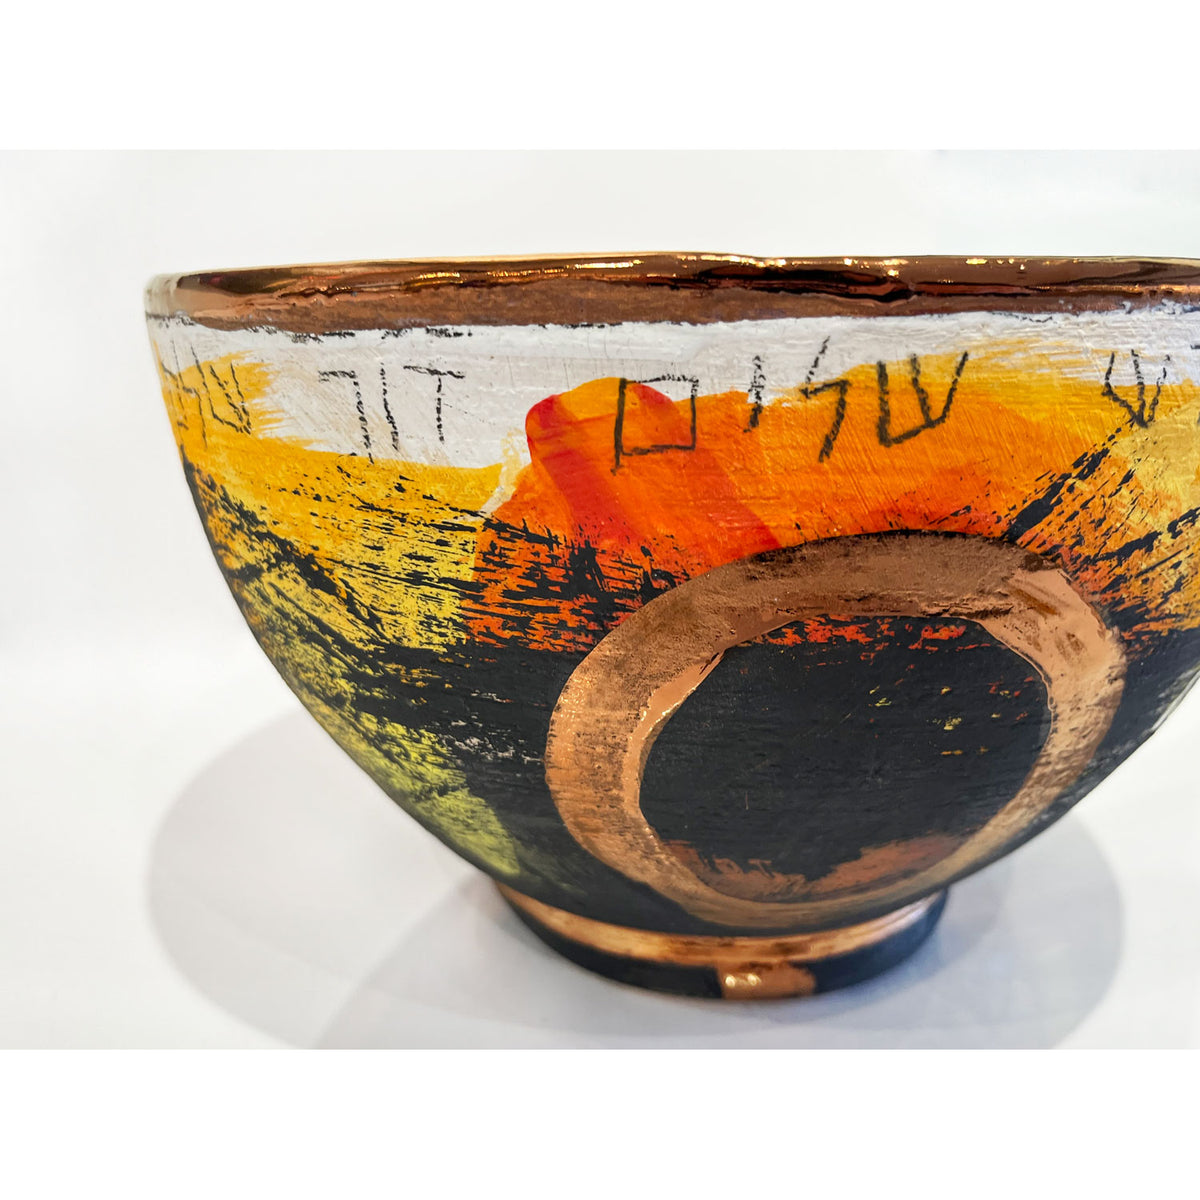 Marla Buck - Large Copper Bowl, 6" x 9" x 9"